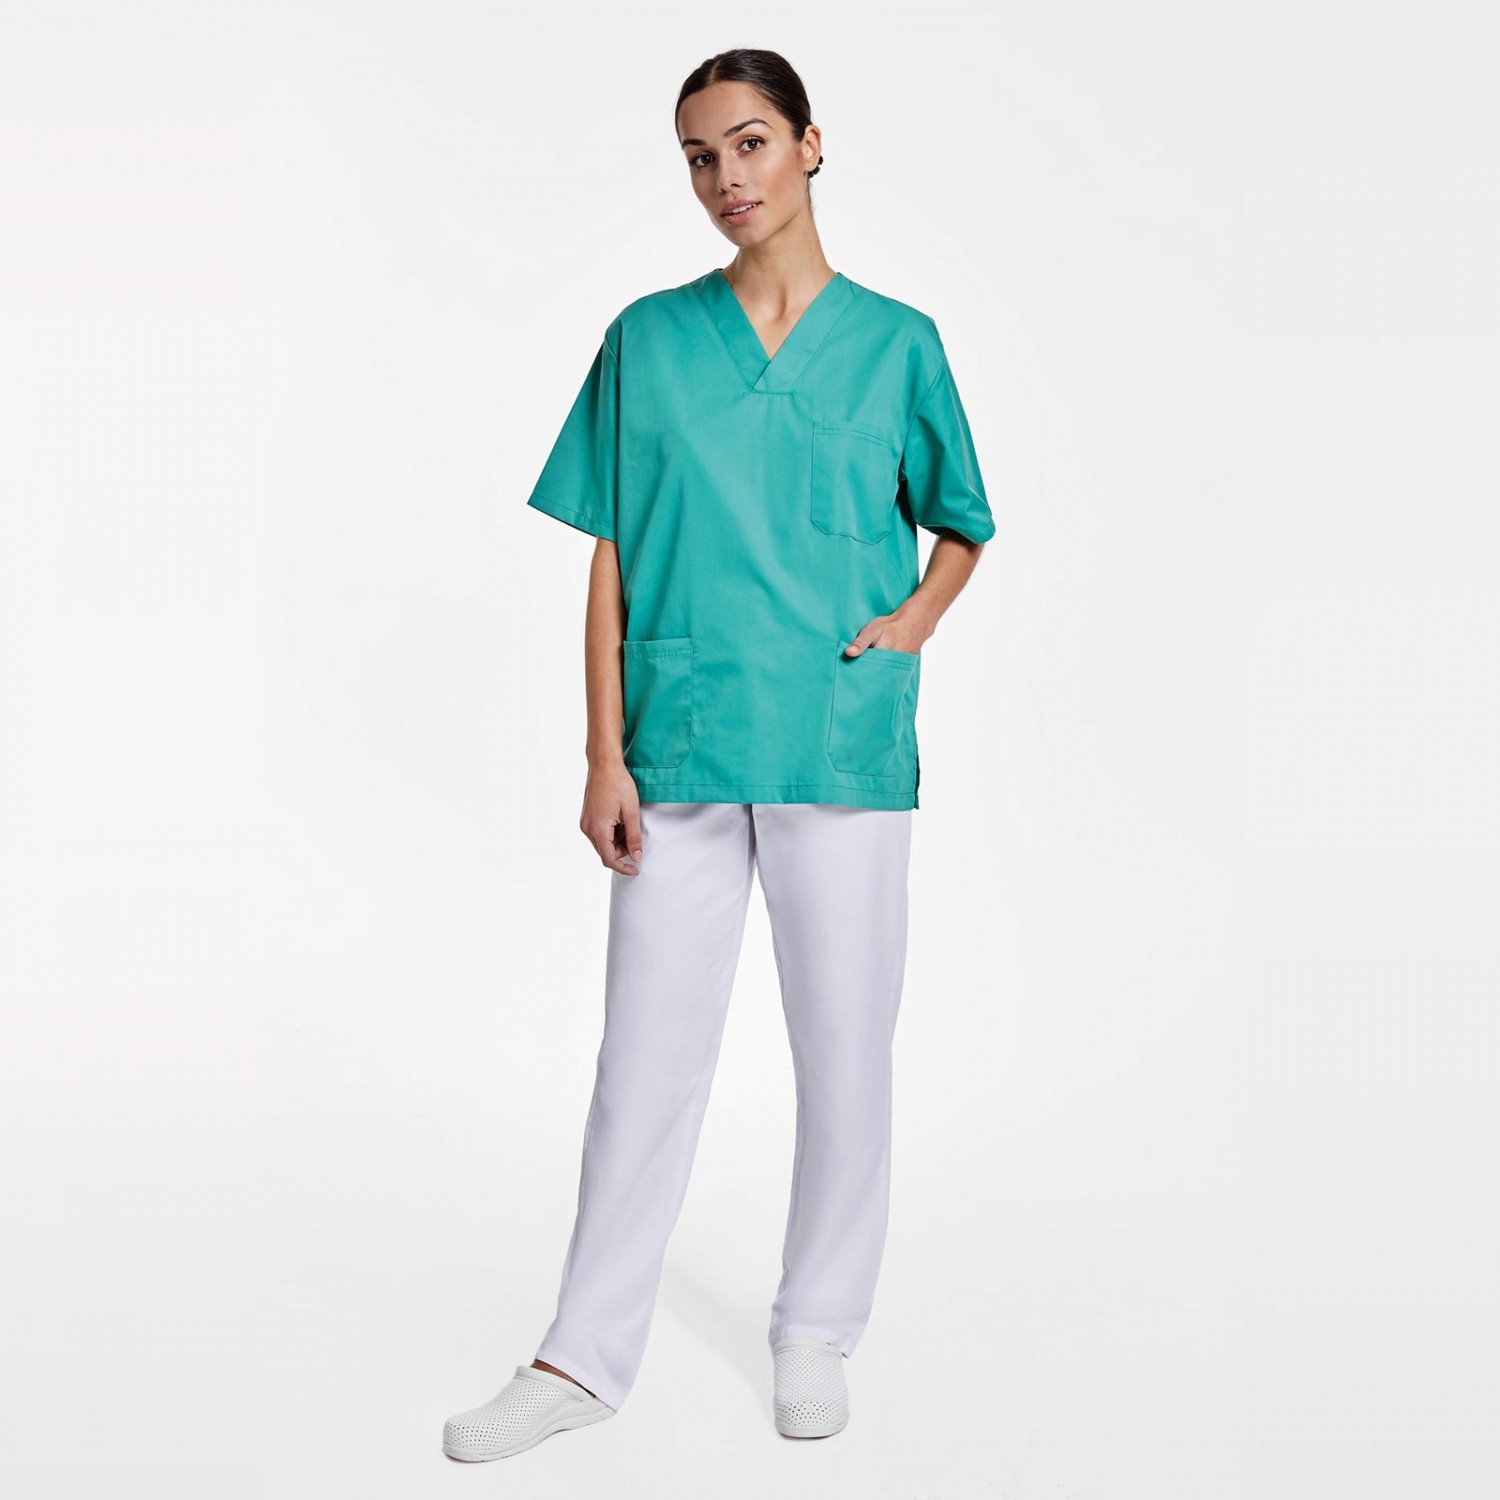 2. Foto Schlupfkasack Medizin Pflege Unisex Hemd Jacke (Farbe: OP-grün Größe:  S)